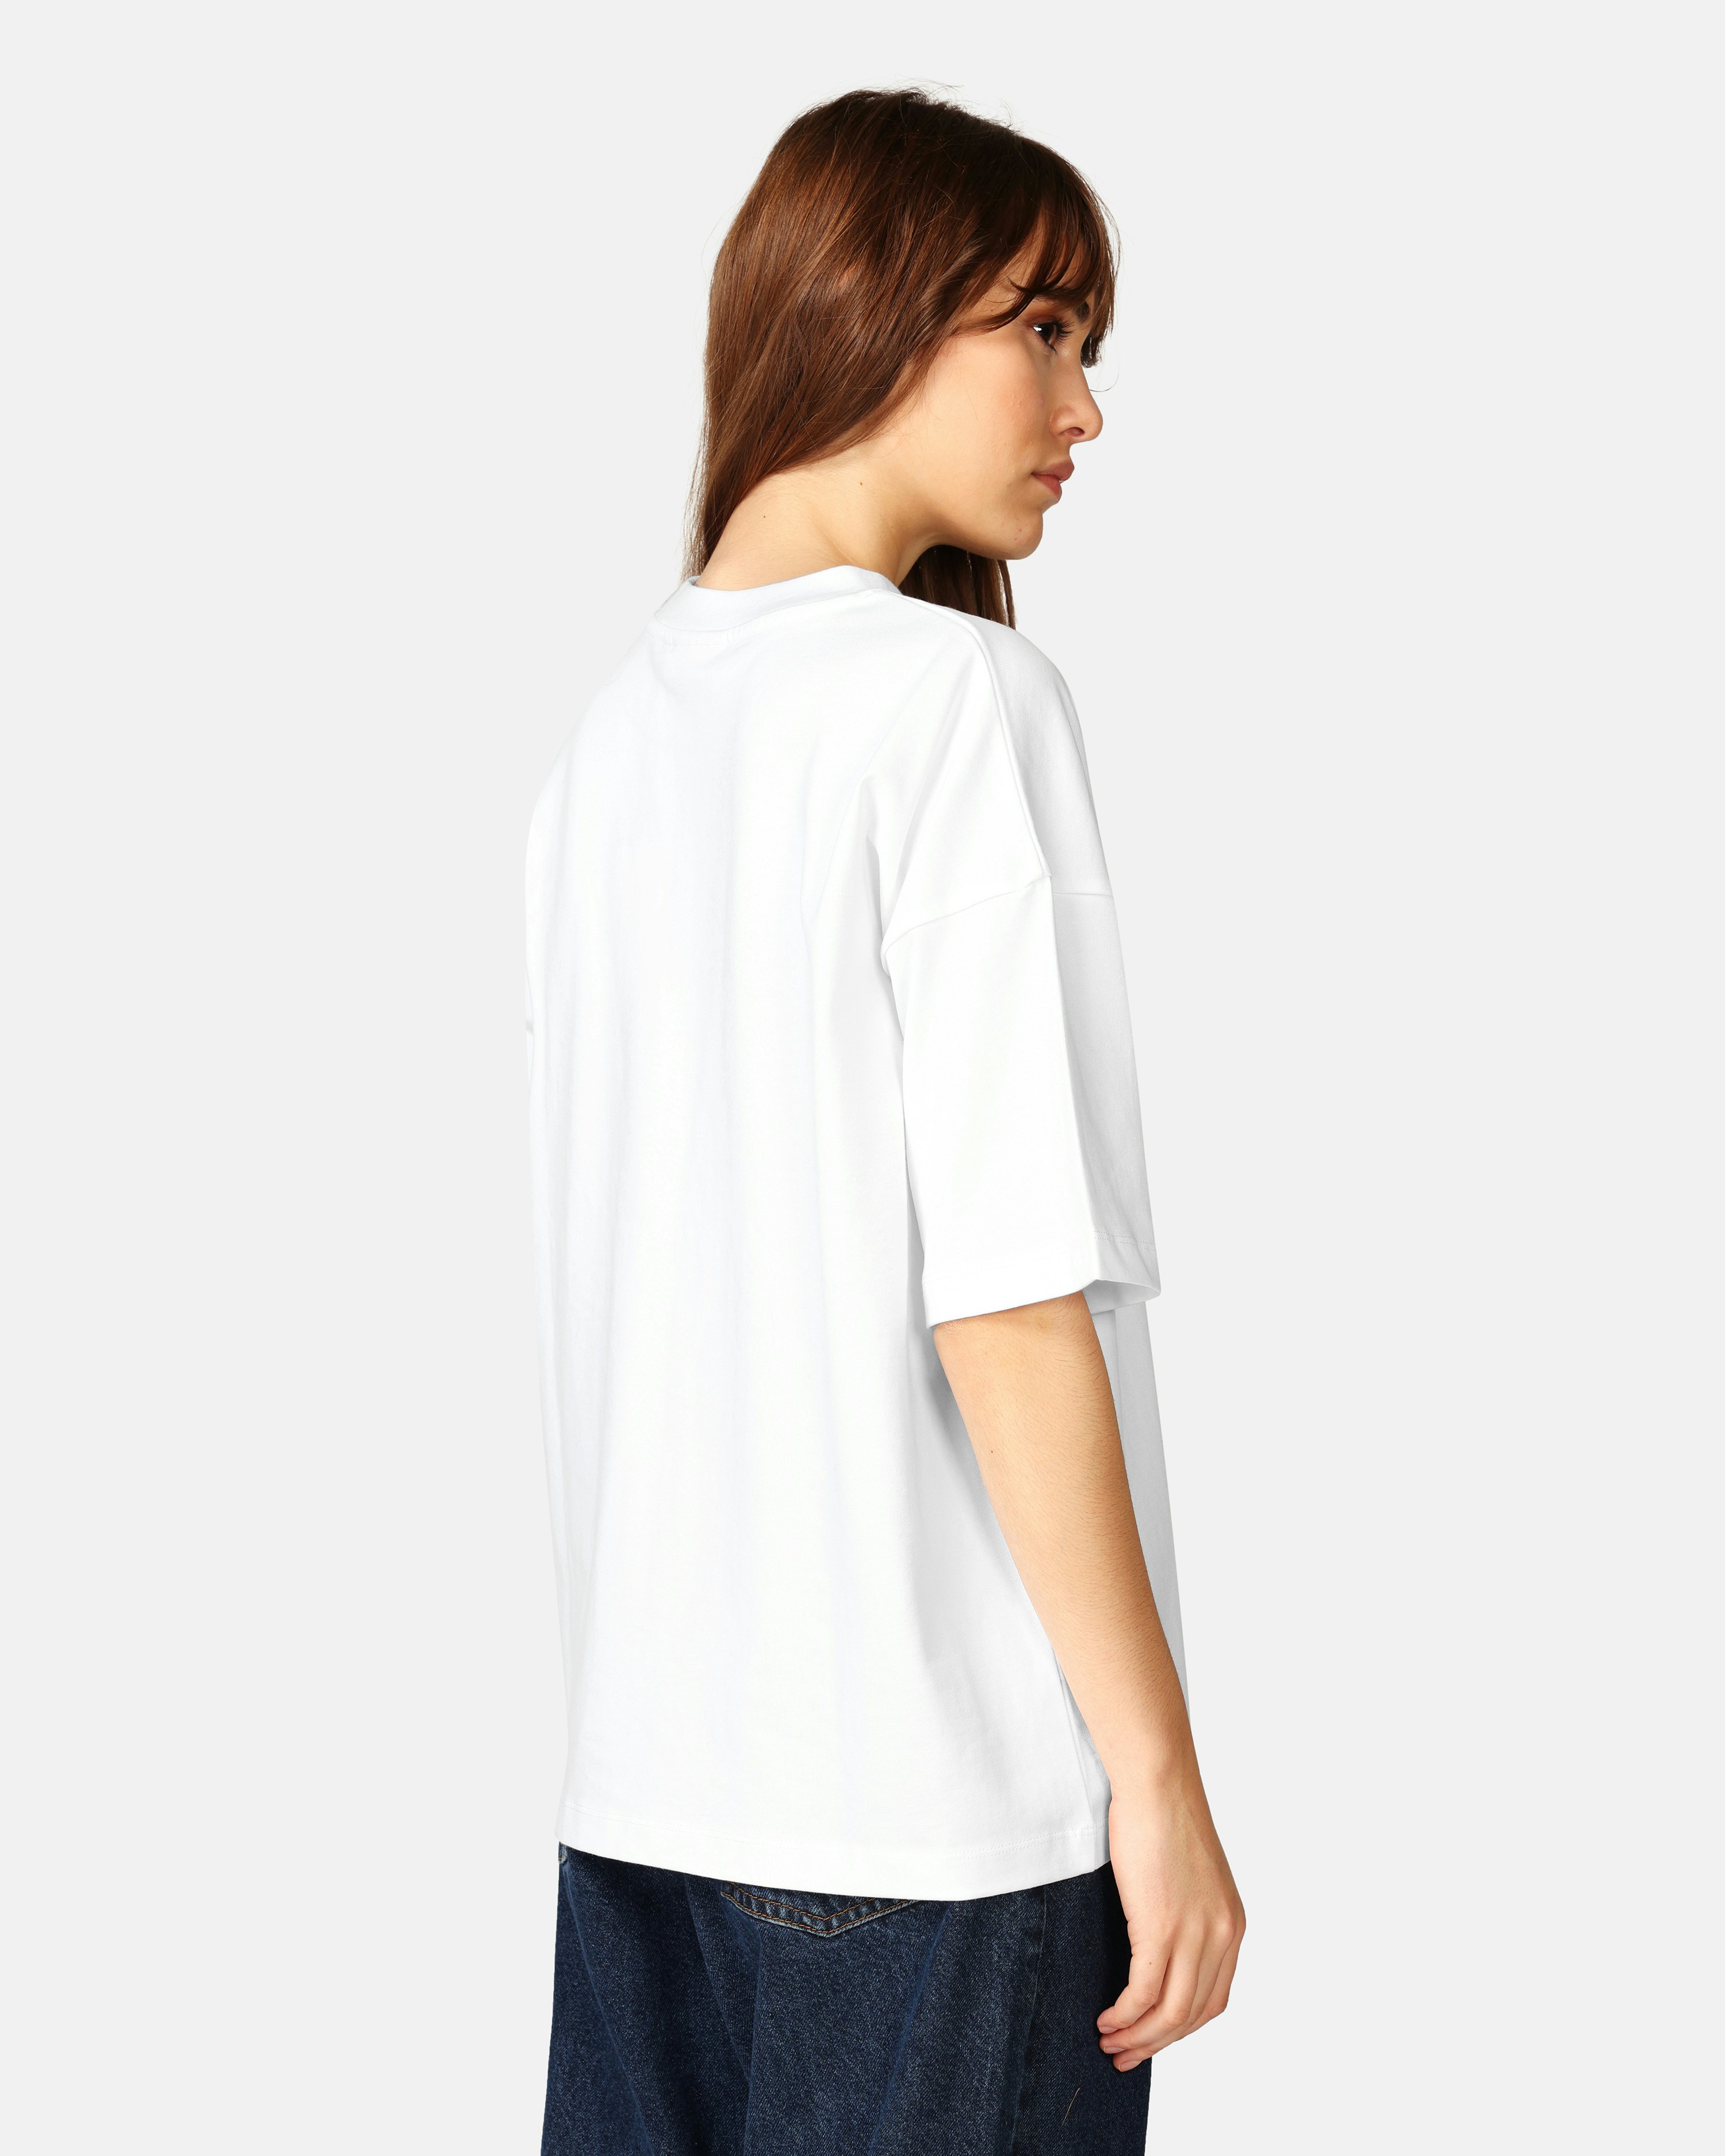 BEYOND MEDALS Culture T-Shirt White | Unisex | Junkyard